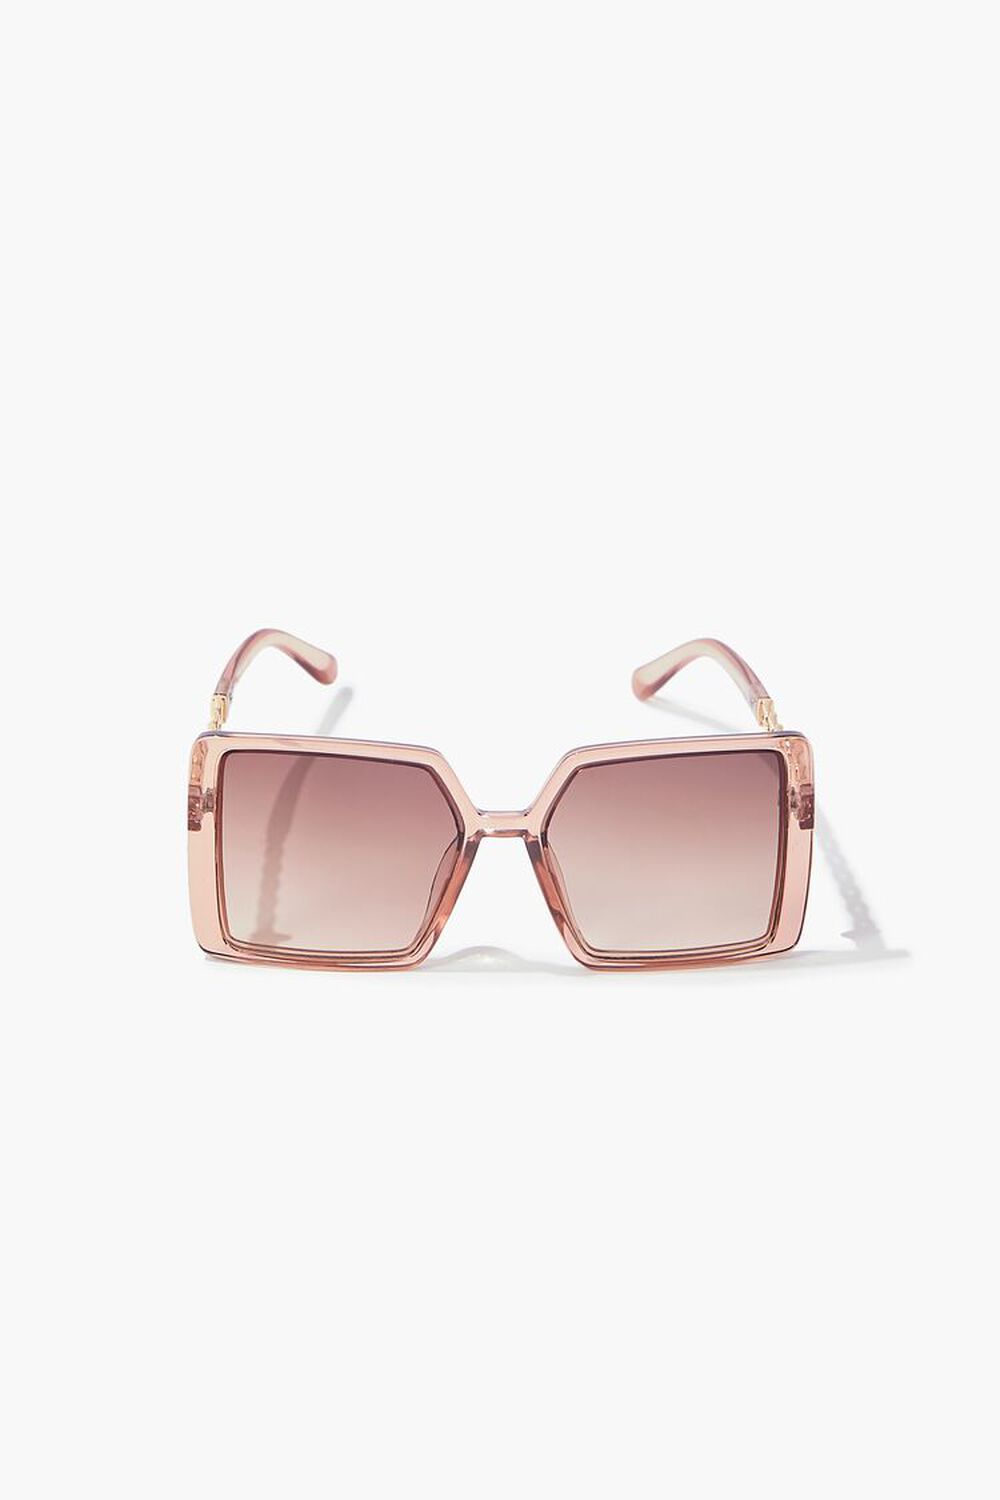 Square Curb Chain Sunglasses, image 3